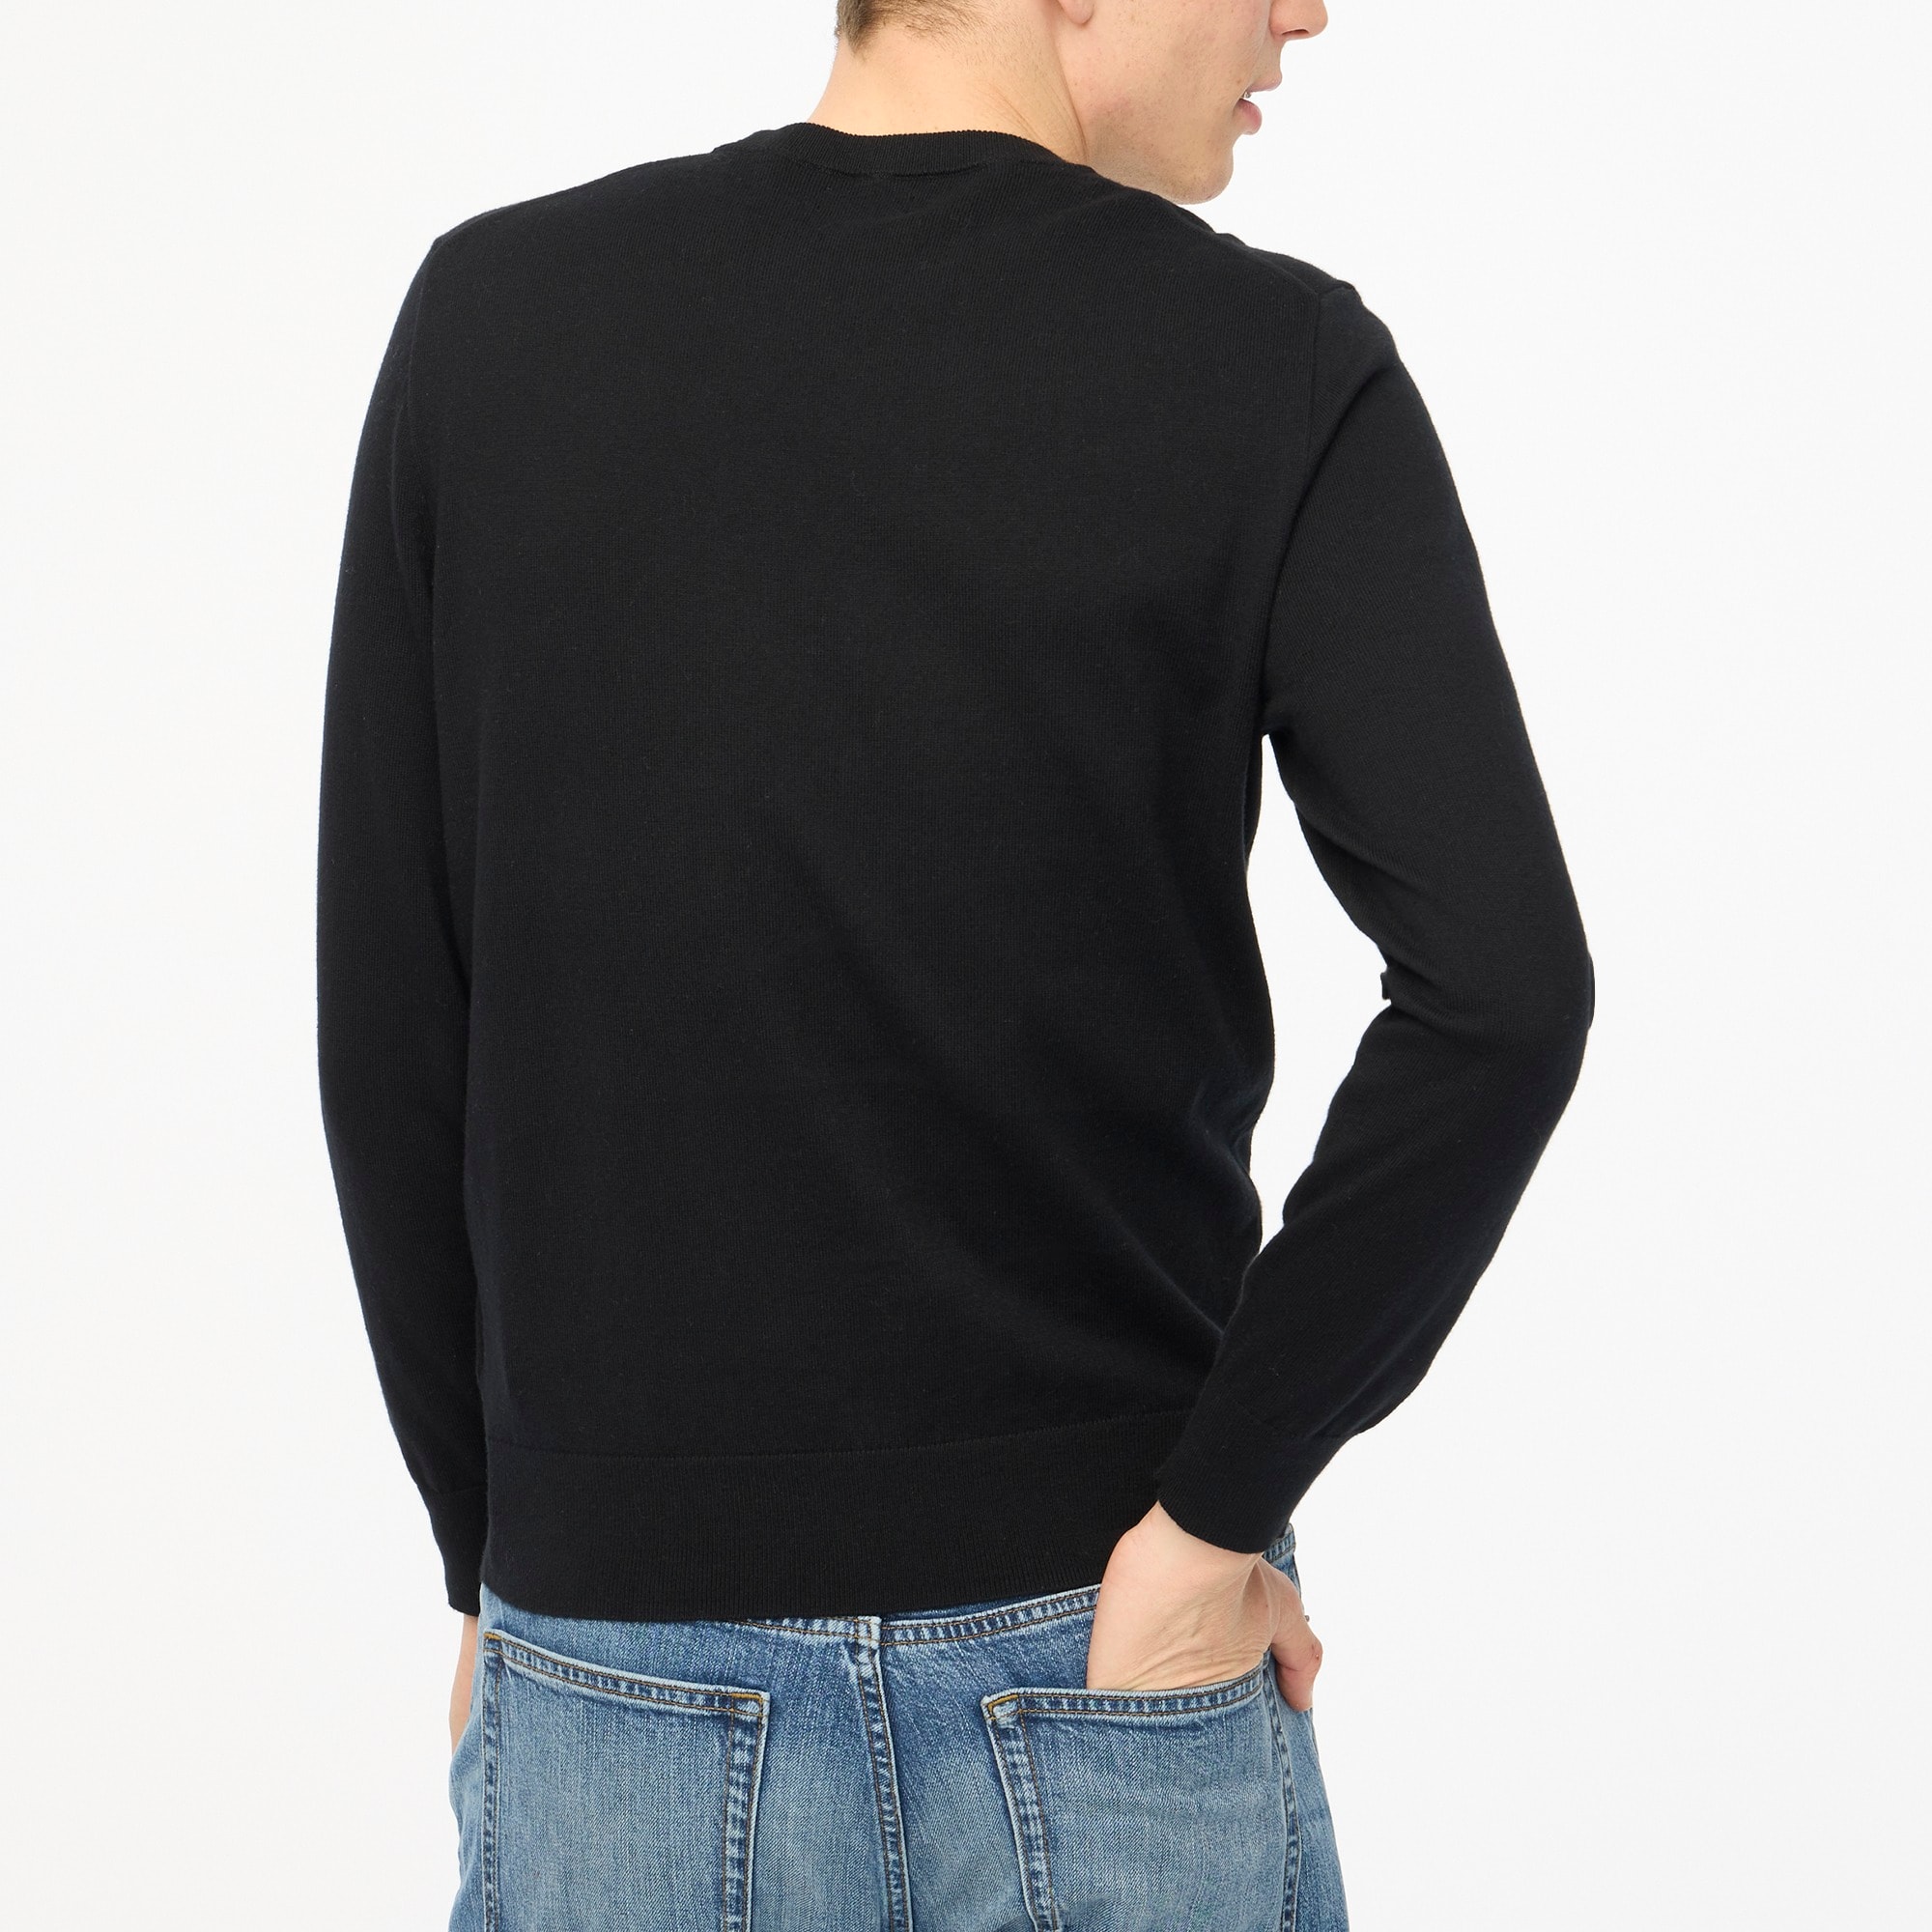 Soft cotton-blend crewneck pullover